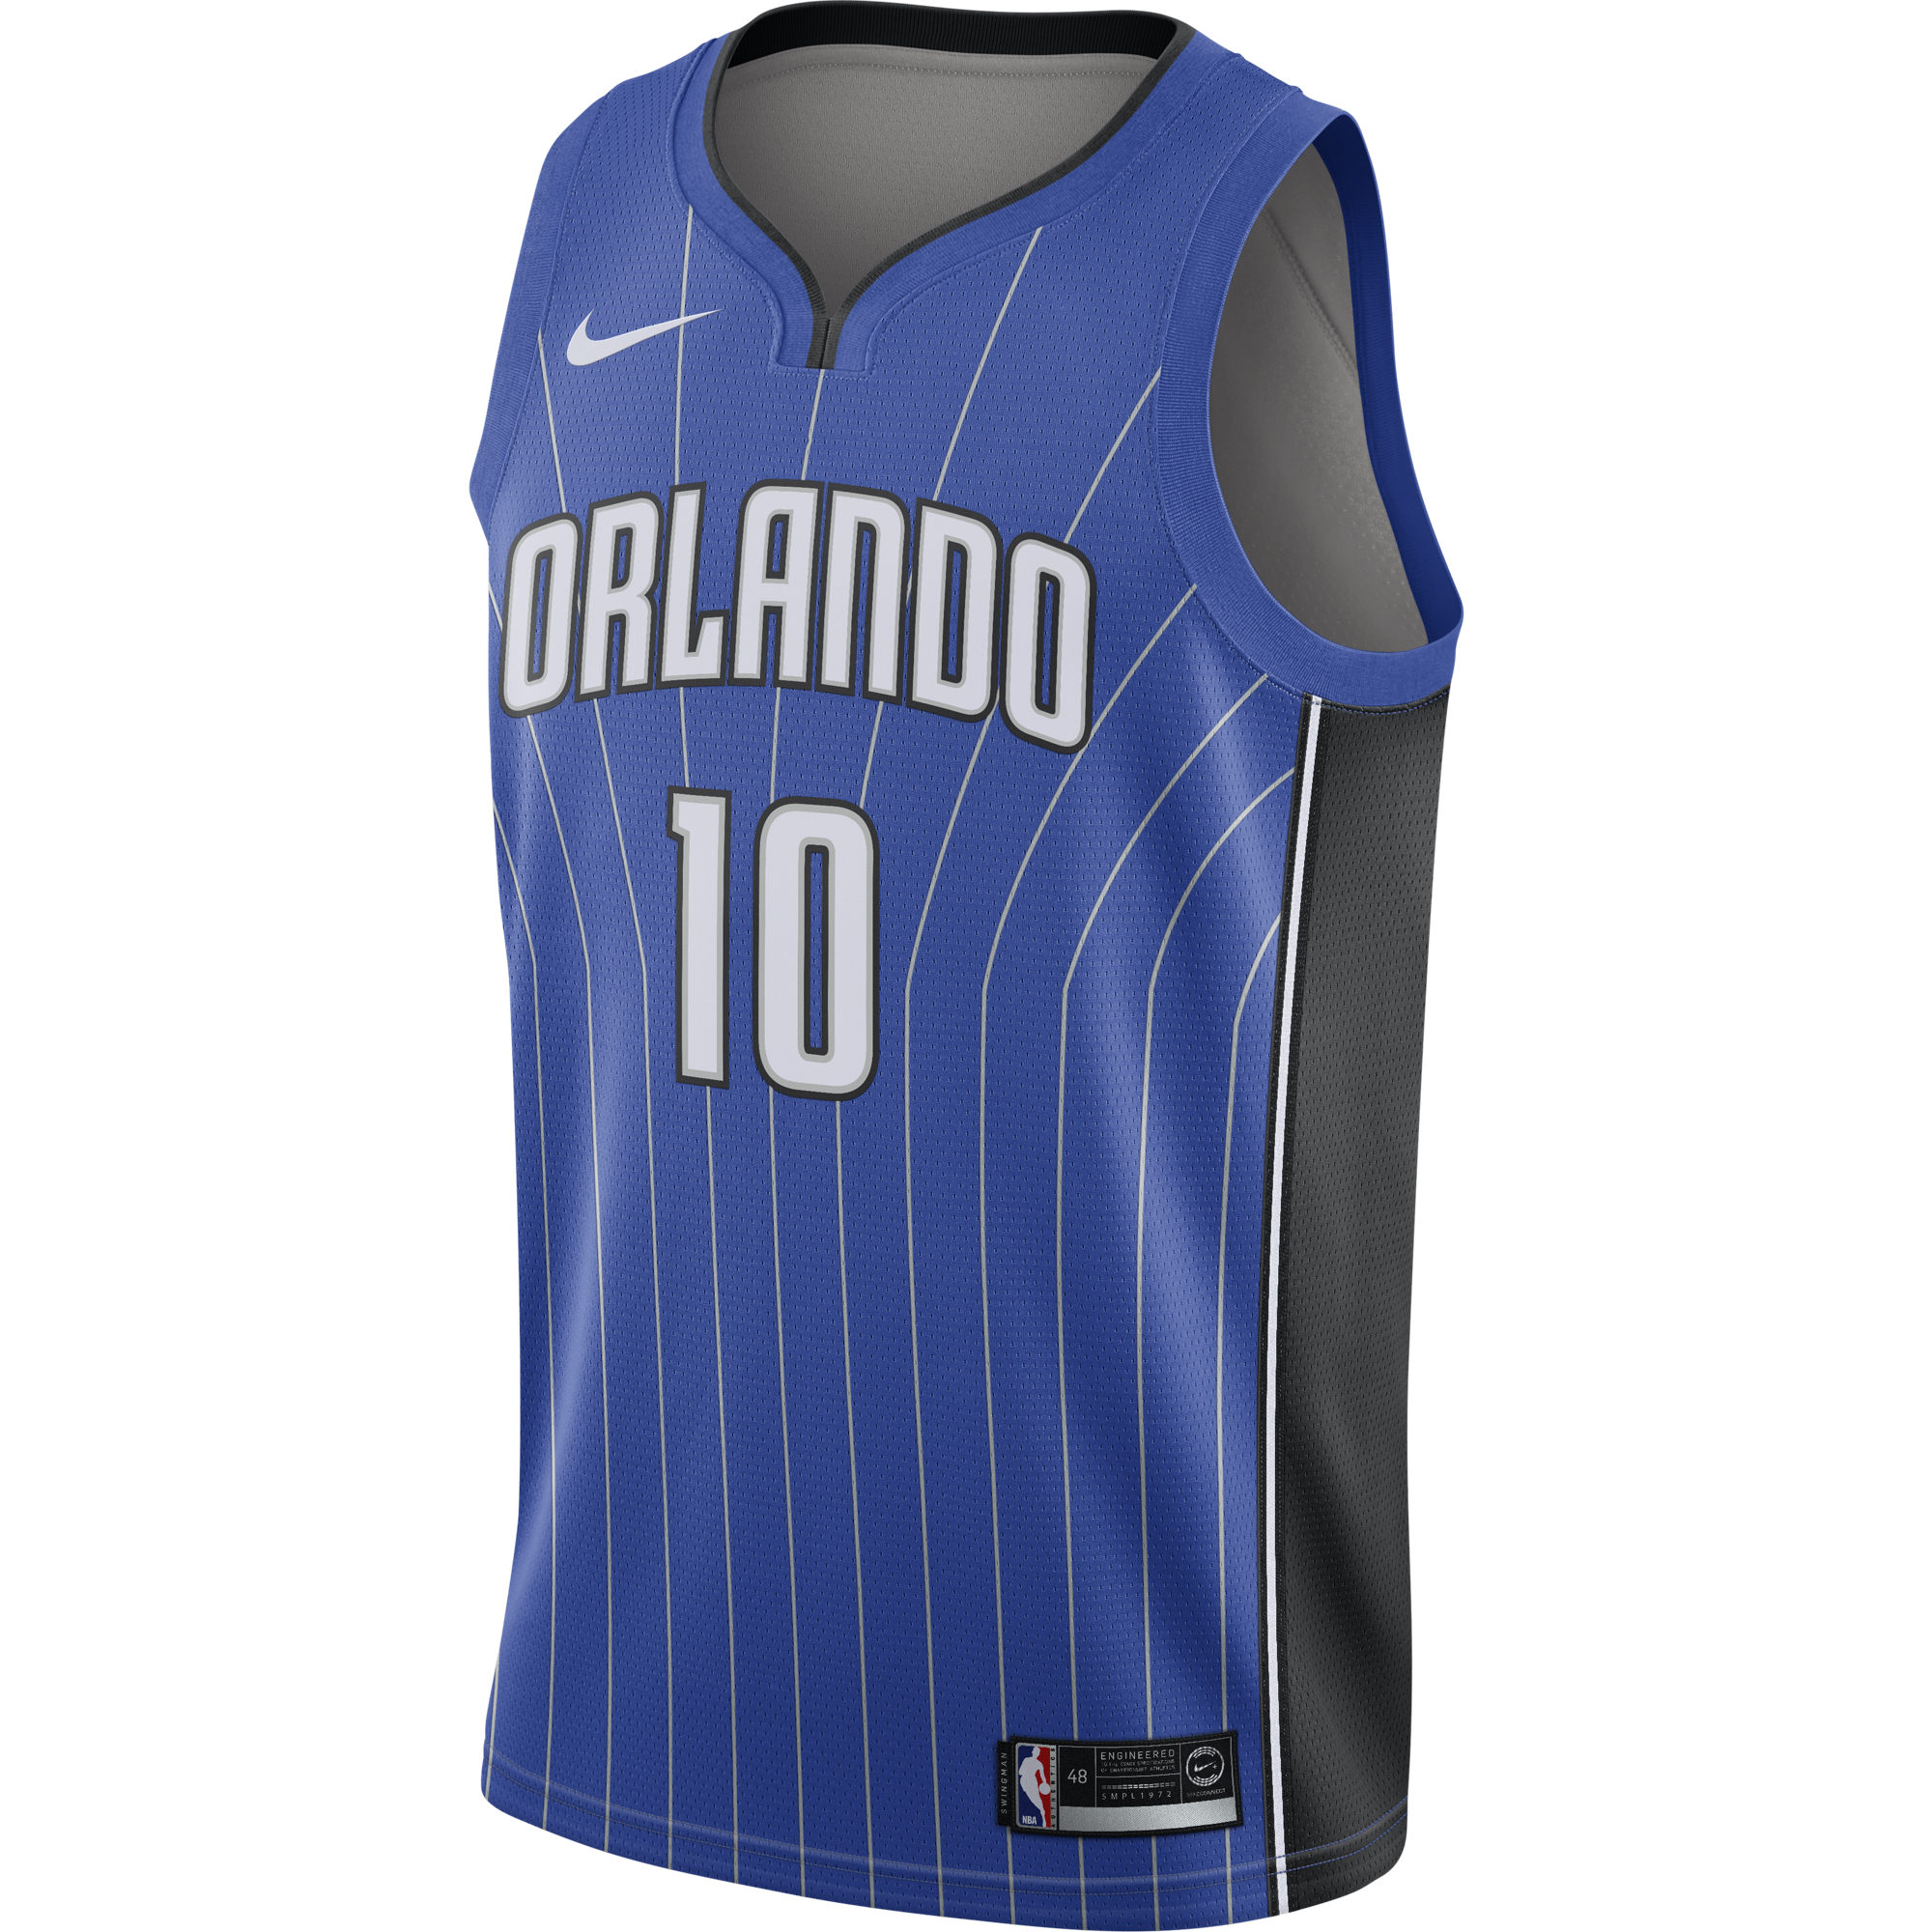 2022 Season McGrady #1 Orlando Magic City Edition NBA Jersey